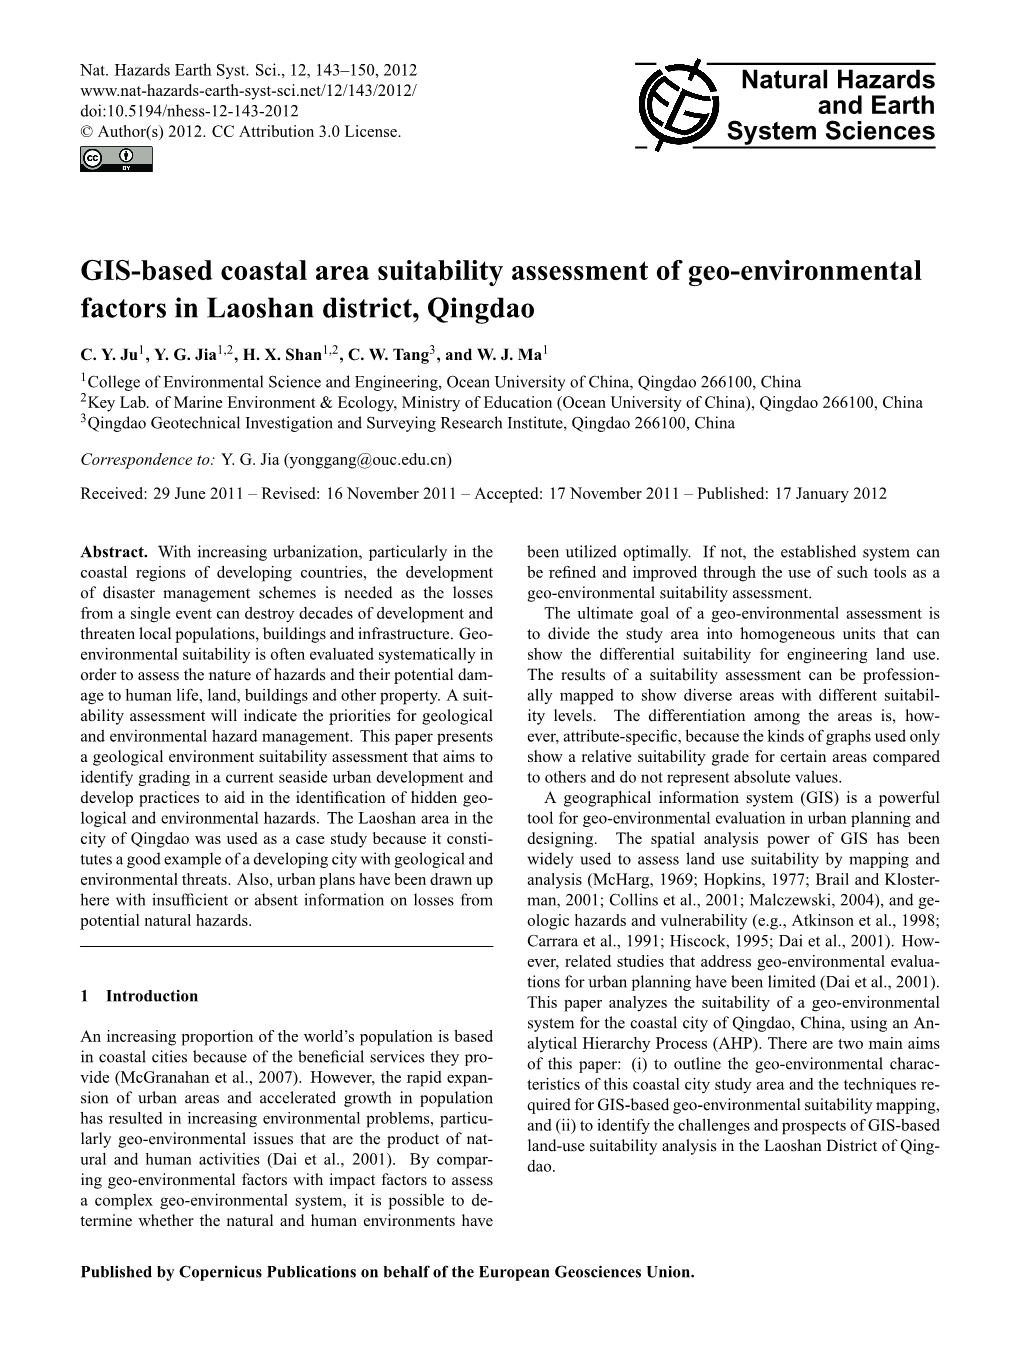 GIS-Based Coastal Area Suitability Assessment of Geo-Environmental Factors in Laoshan District, Qingdao